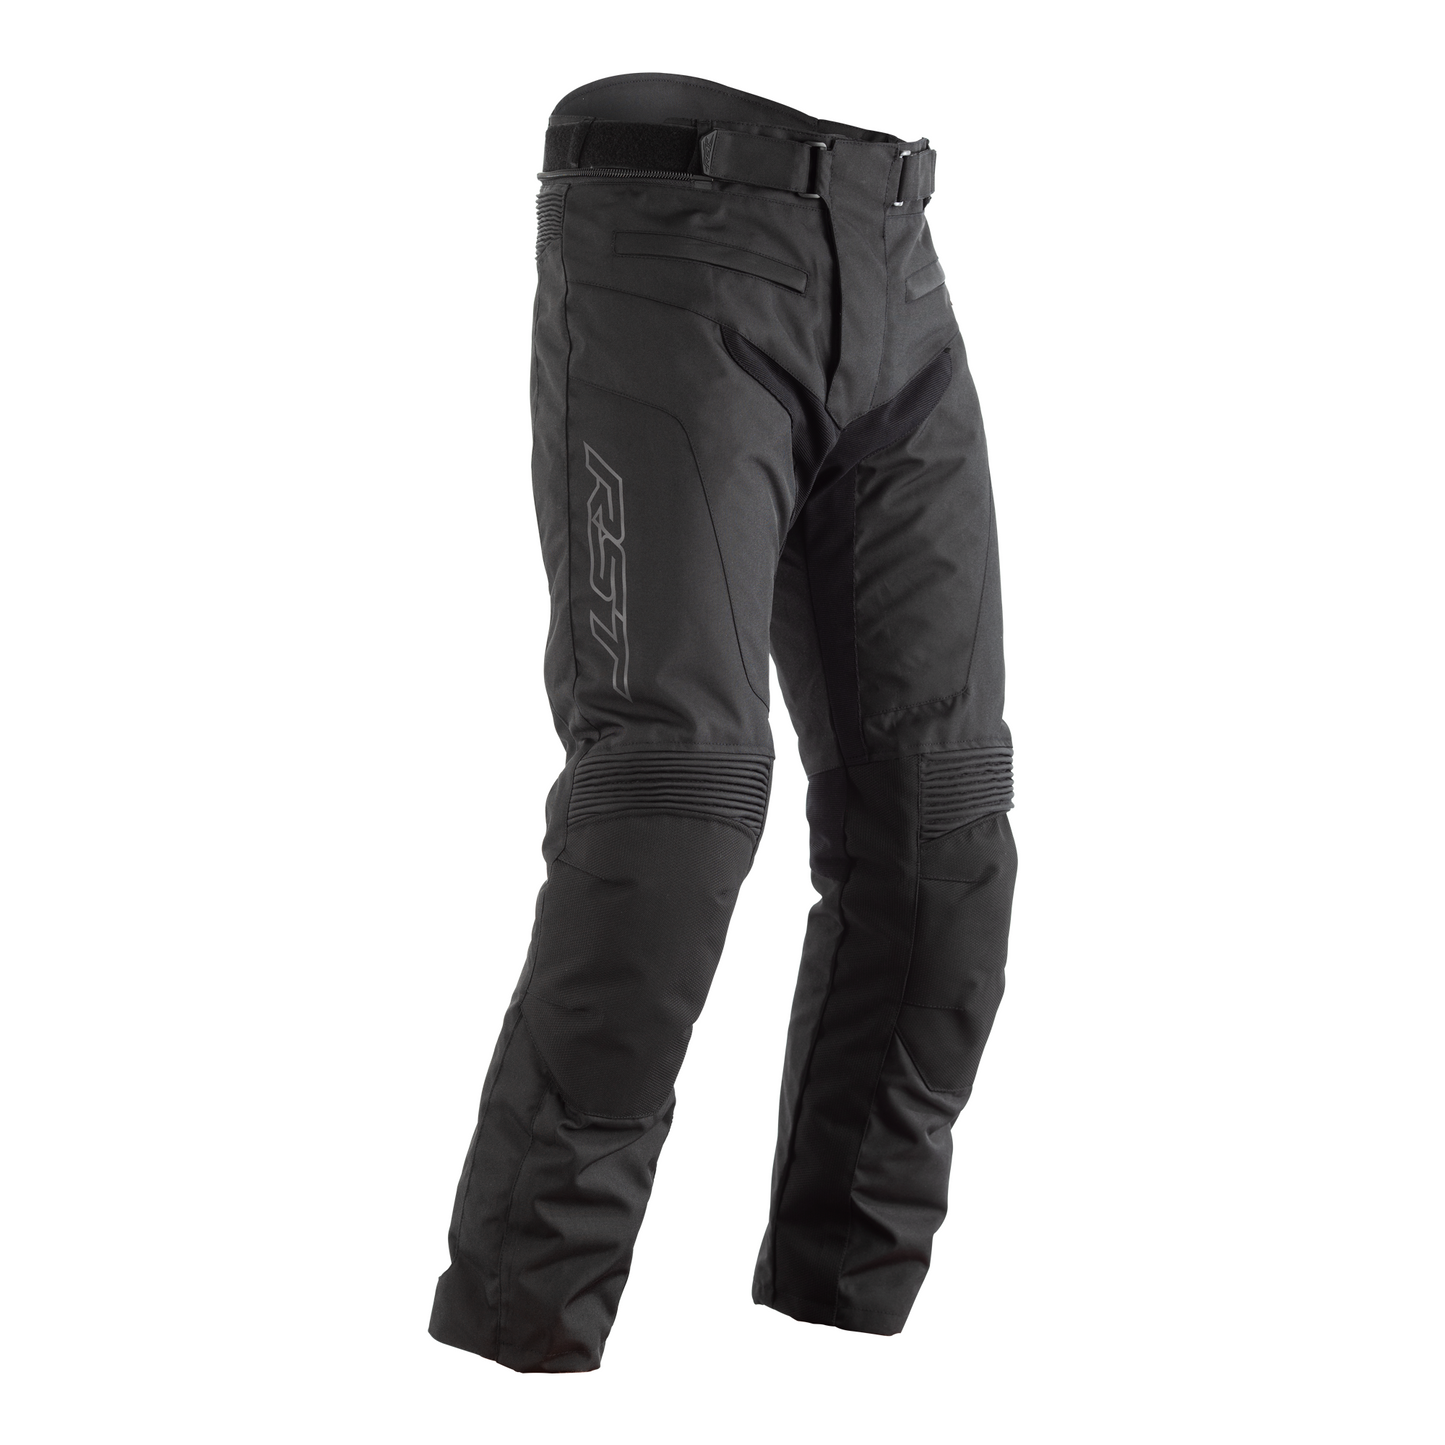 RST Syncro (CE) Men's Textile Riding Jeans - Regular Leg - Black